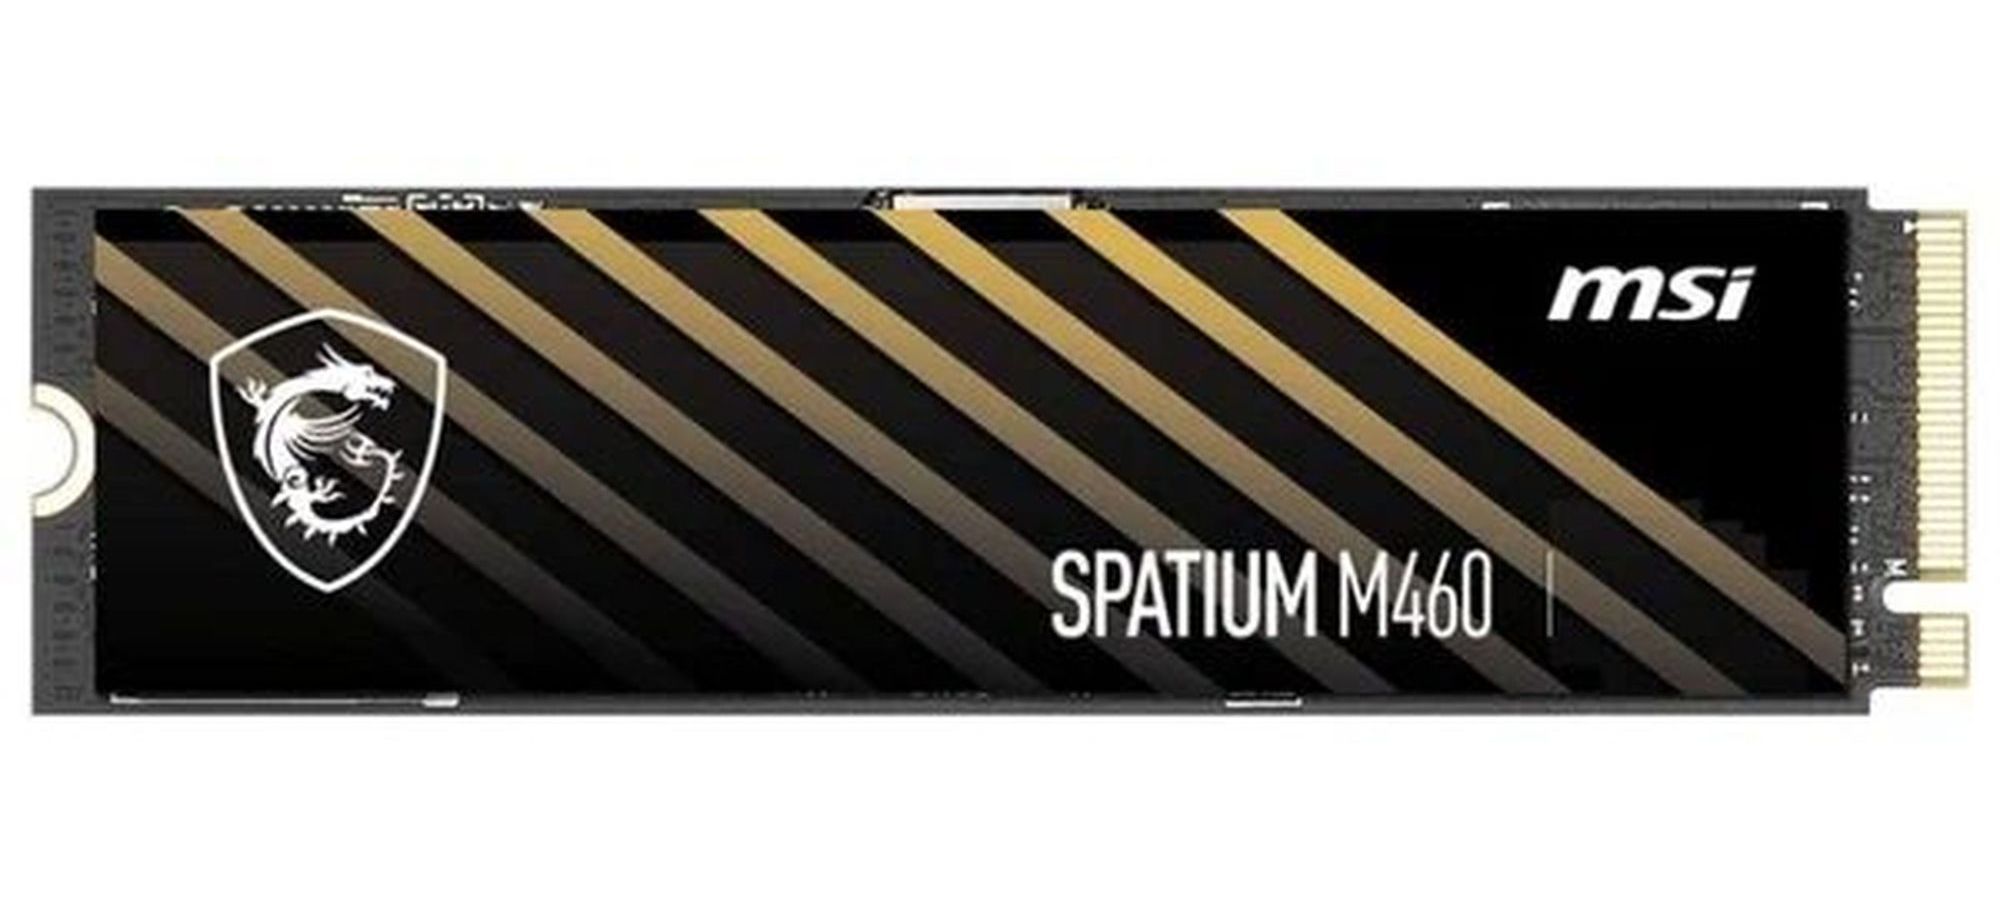 Накопитель SSD MSI SPATIUM M460 NVMe M.2 1TB (S78-440L930-P83) накопитель ssd spatium m450 500gb s78 440k220 p83